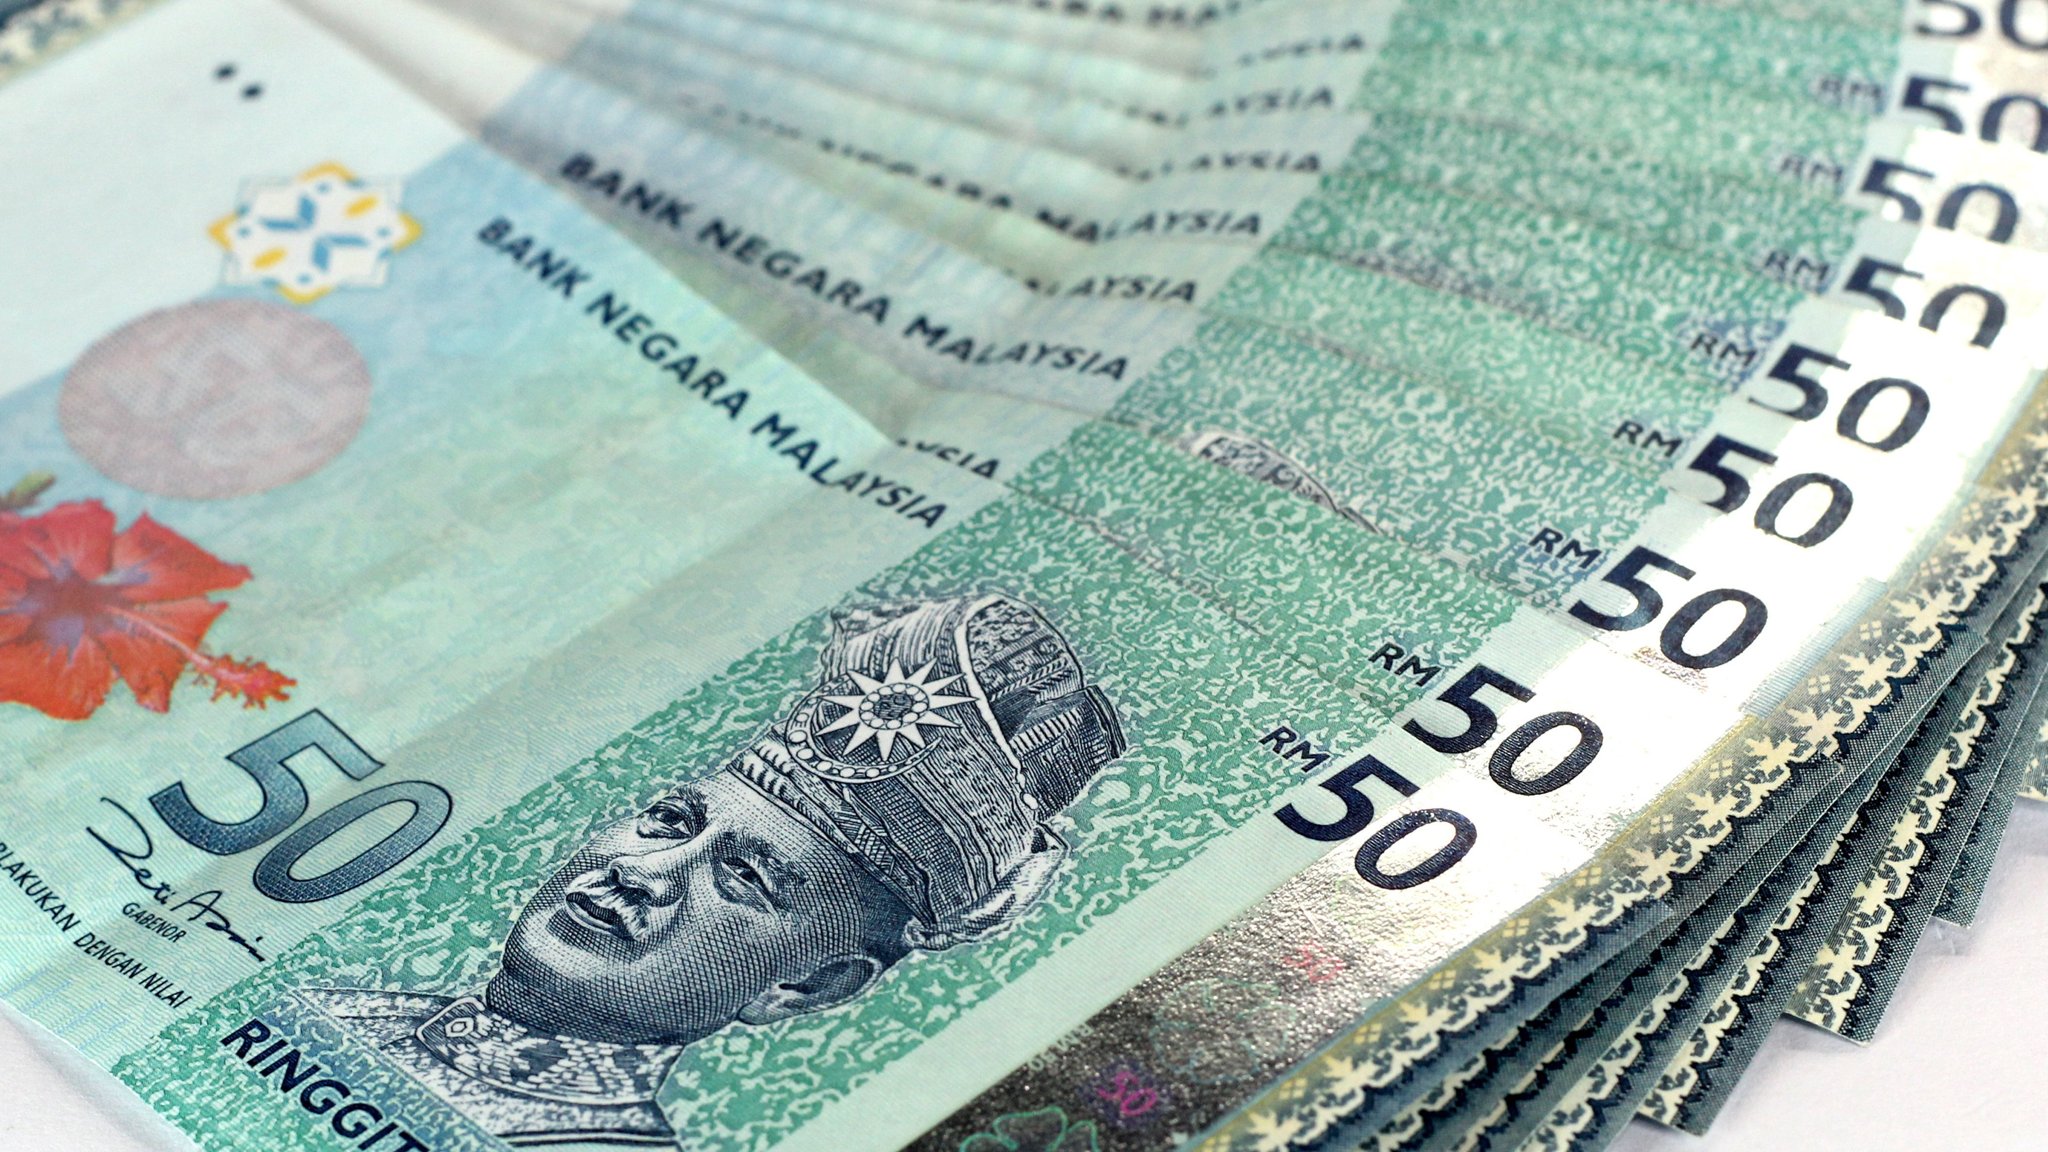 Ringgit, Malaysian Currency, Malaysia Banknotes